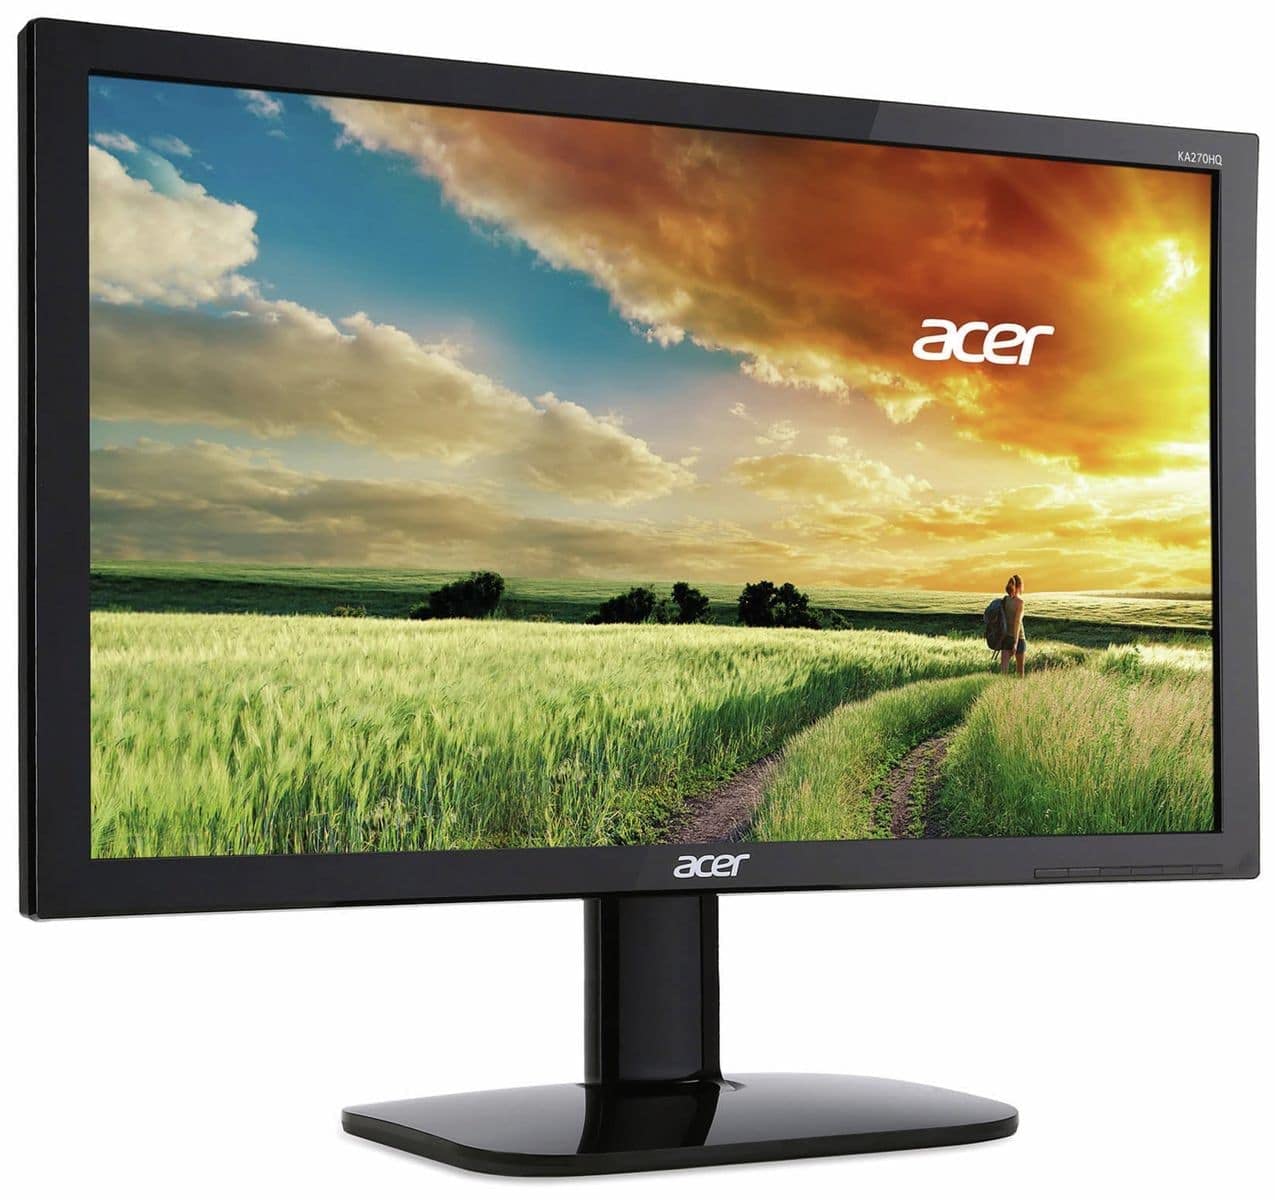 Acer KA270HA Monitor 27 Zoll (69 cm Bildschirm) Full HD, 60Hz, 4ms (G2G), HDMI 1.4, DVI, VGA, Schwarz